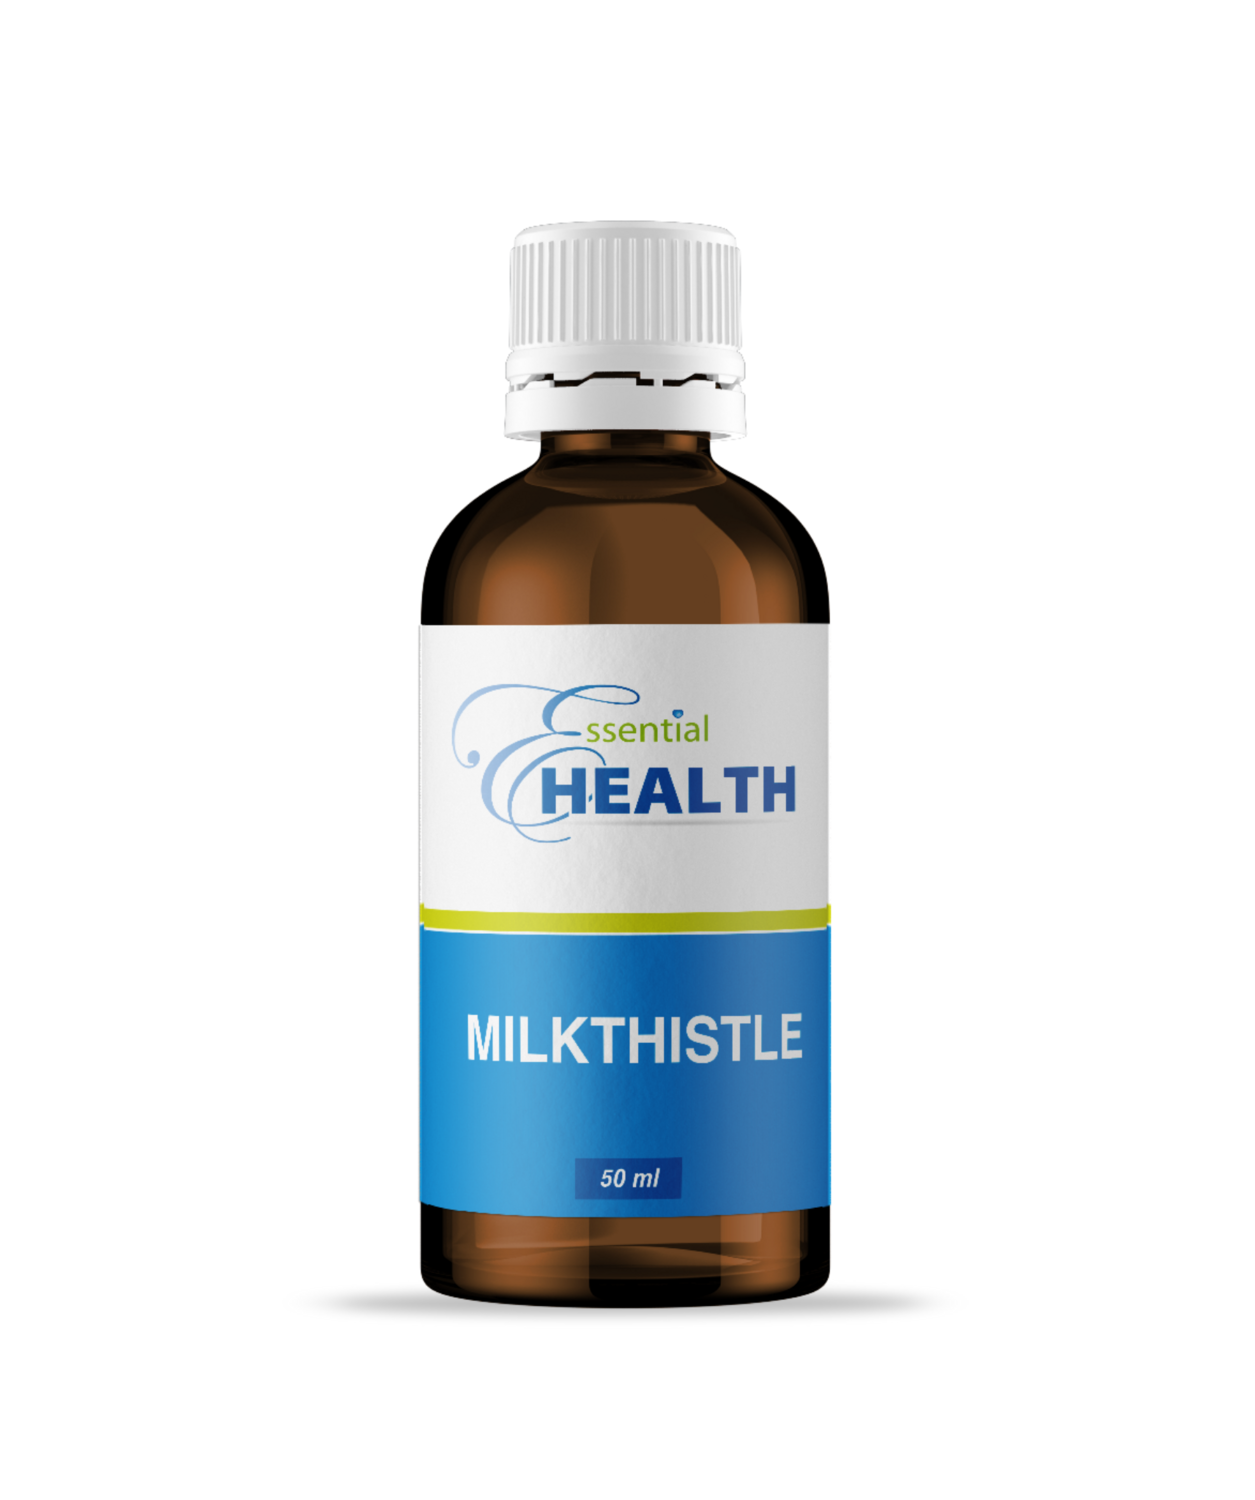 Essential Health Milkthistle 50ml